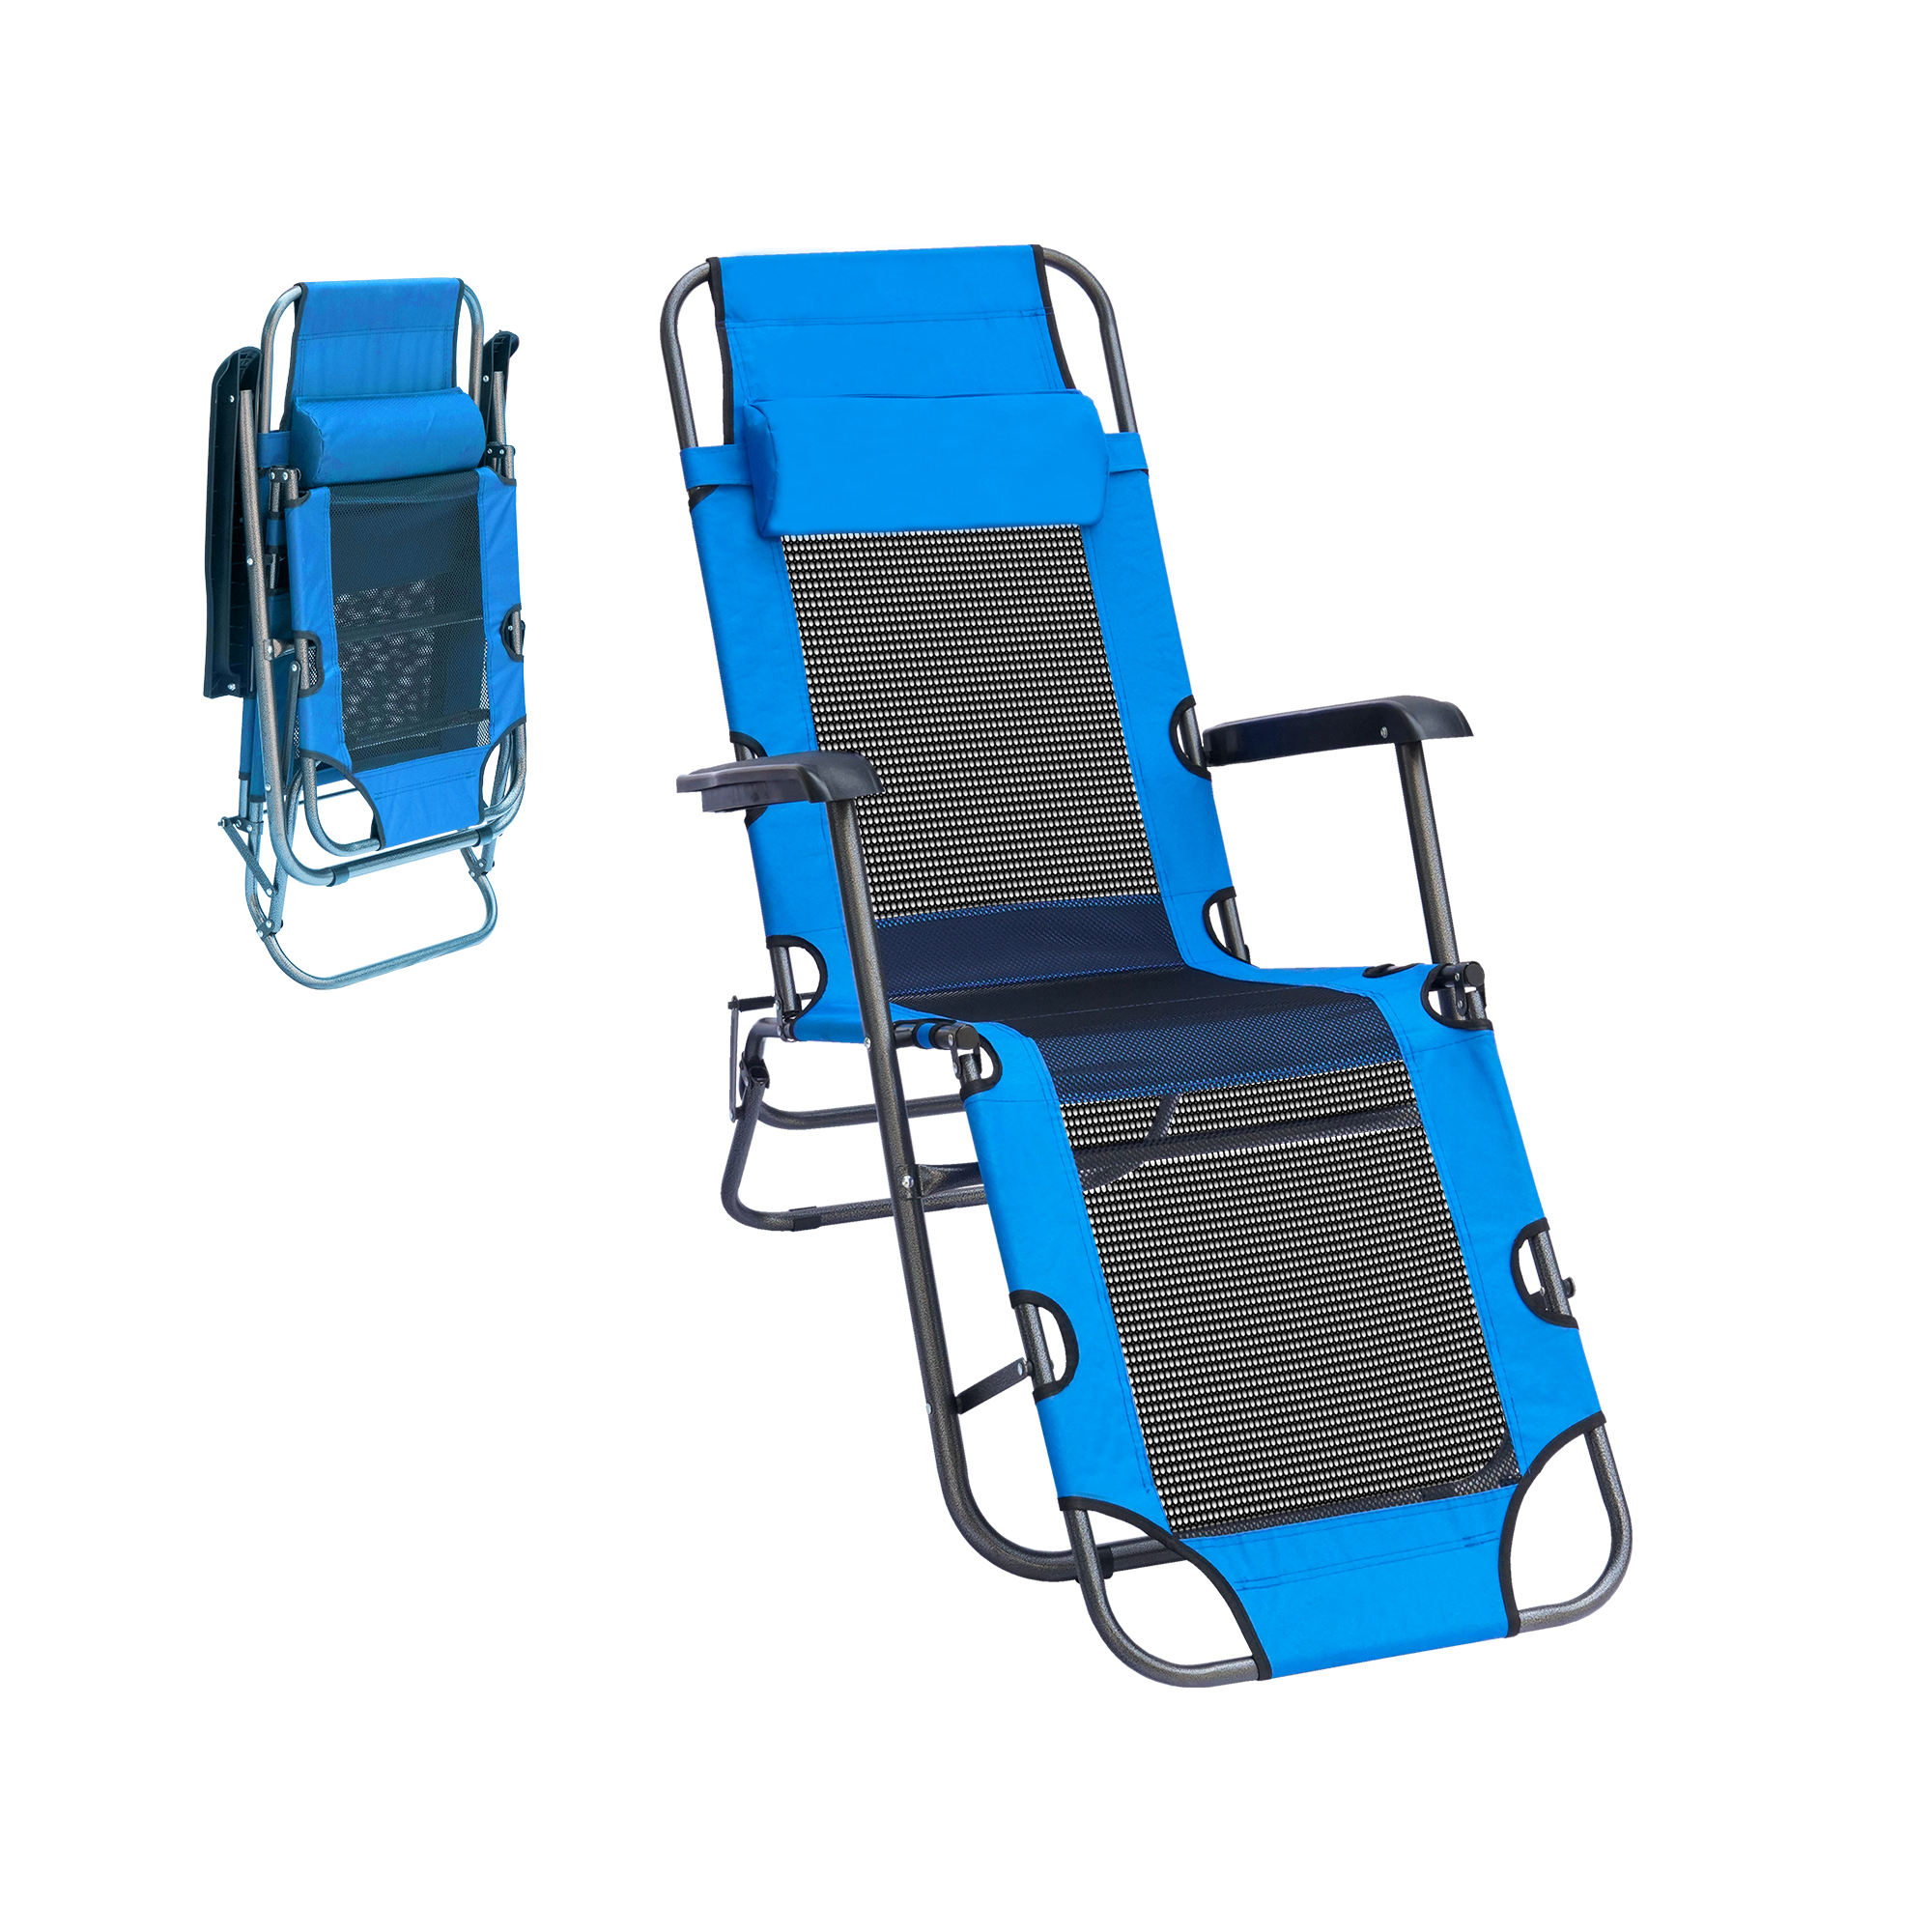 Kahoo Zero Gravity Lounge Chair Recliner Mesh Blue - image 4 of 7